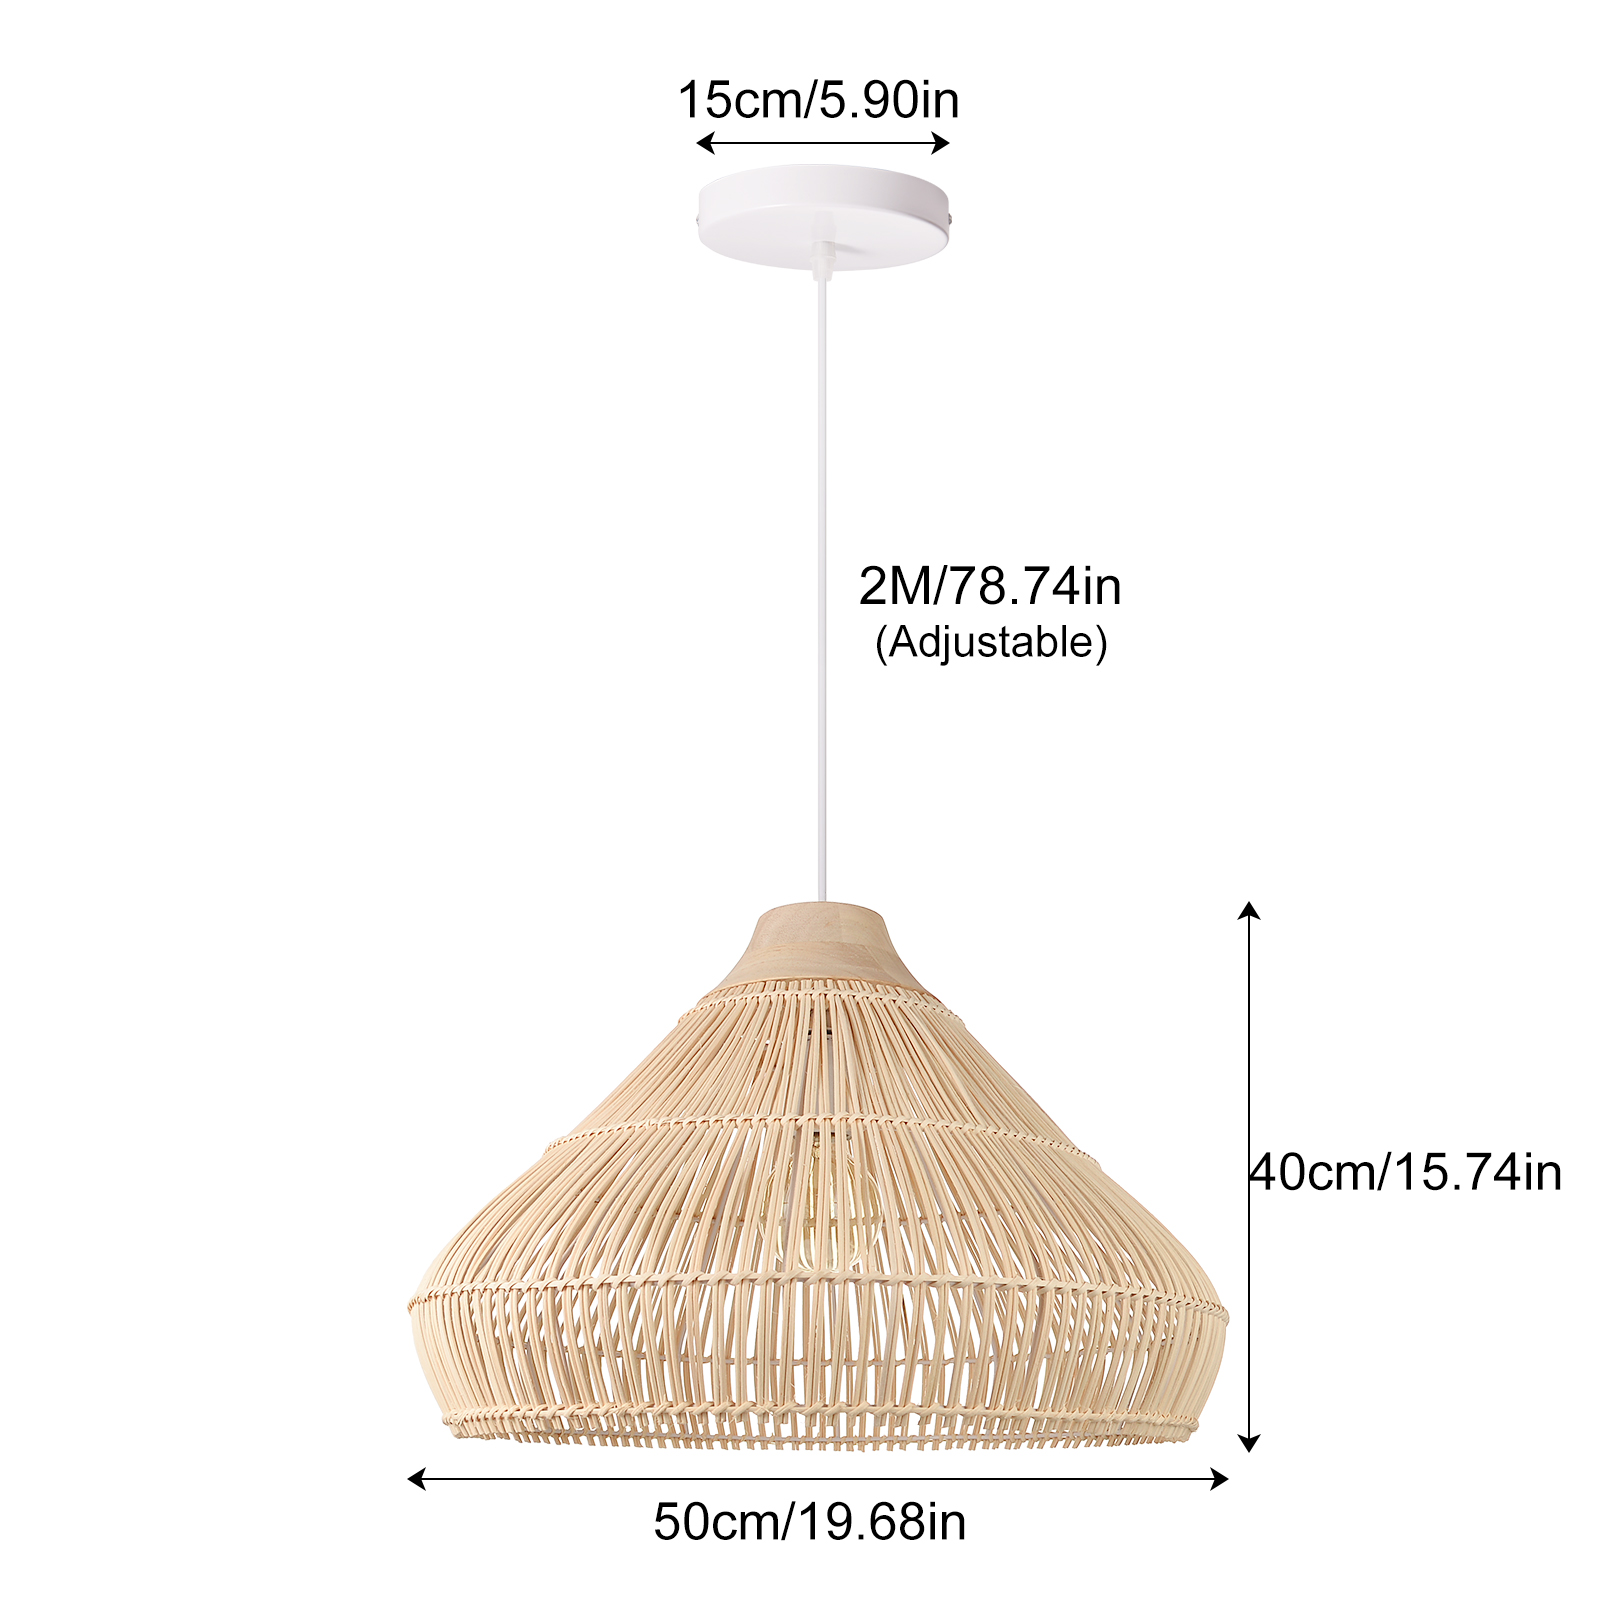 Solid wood rattan pendant light